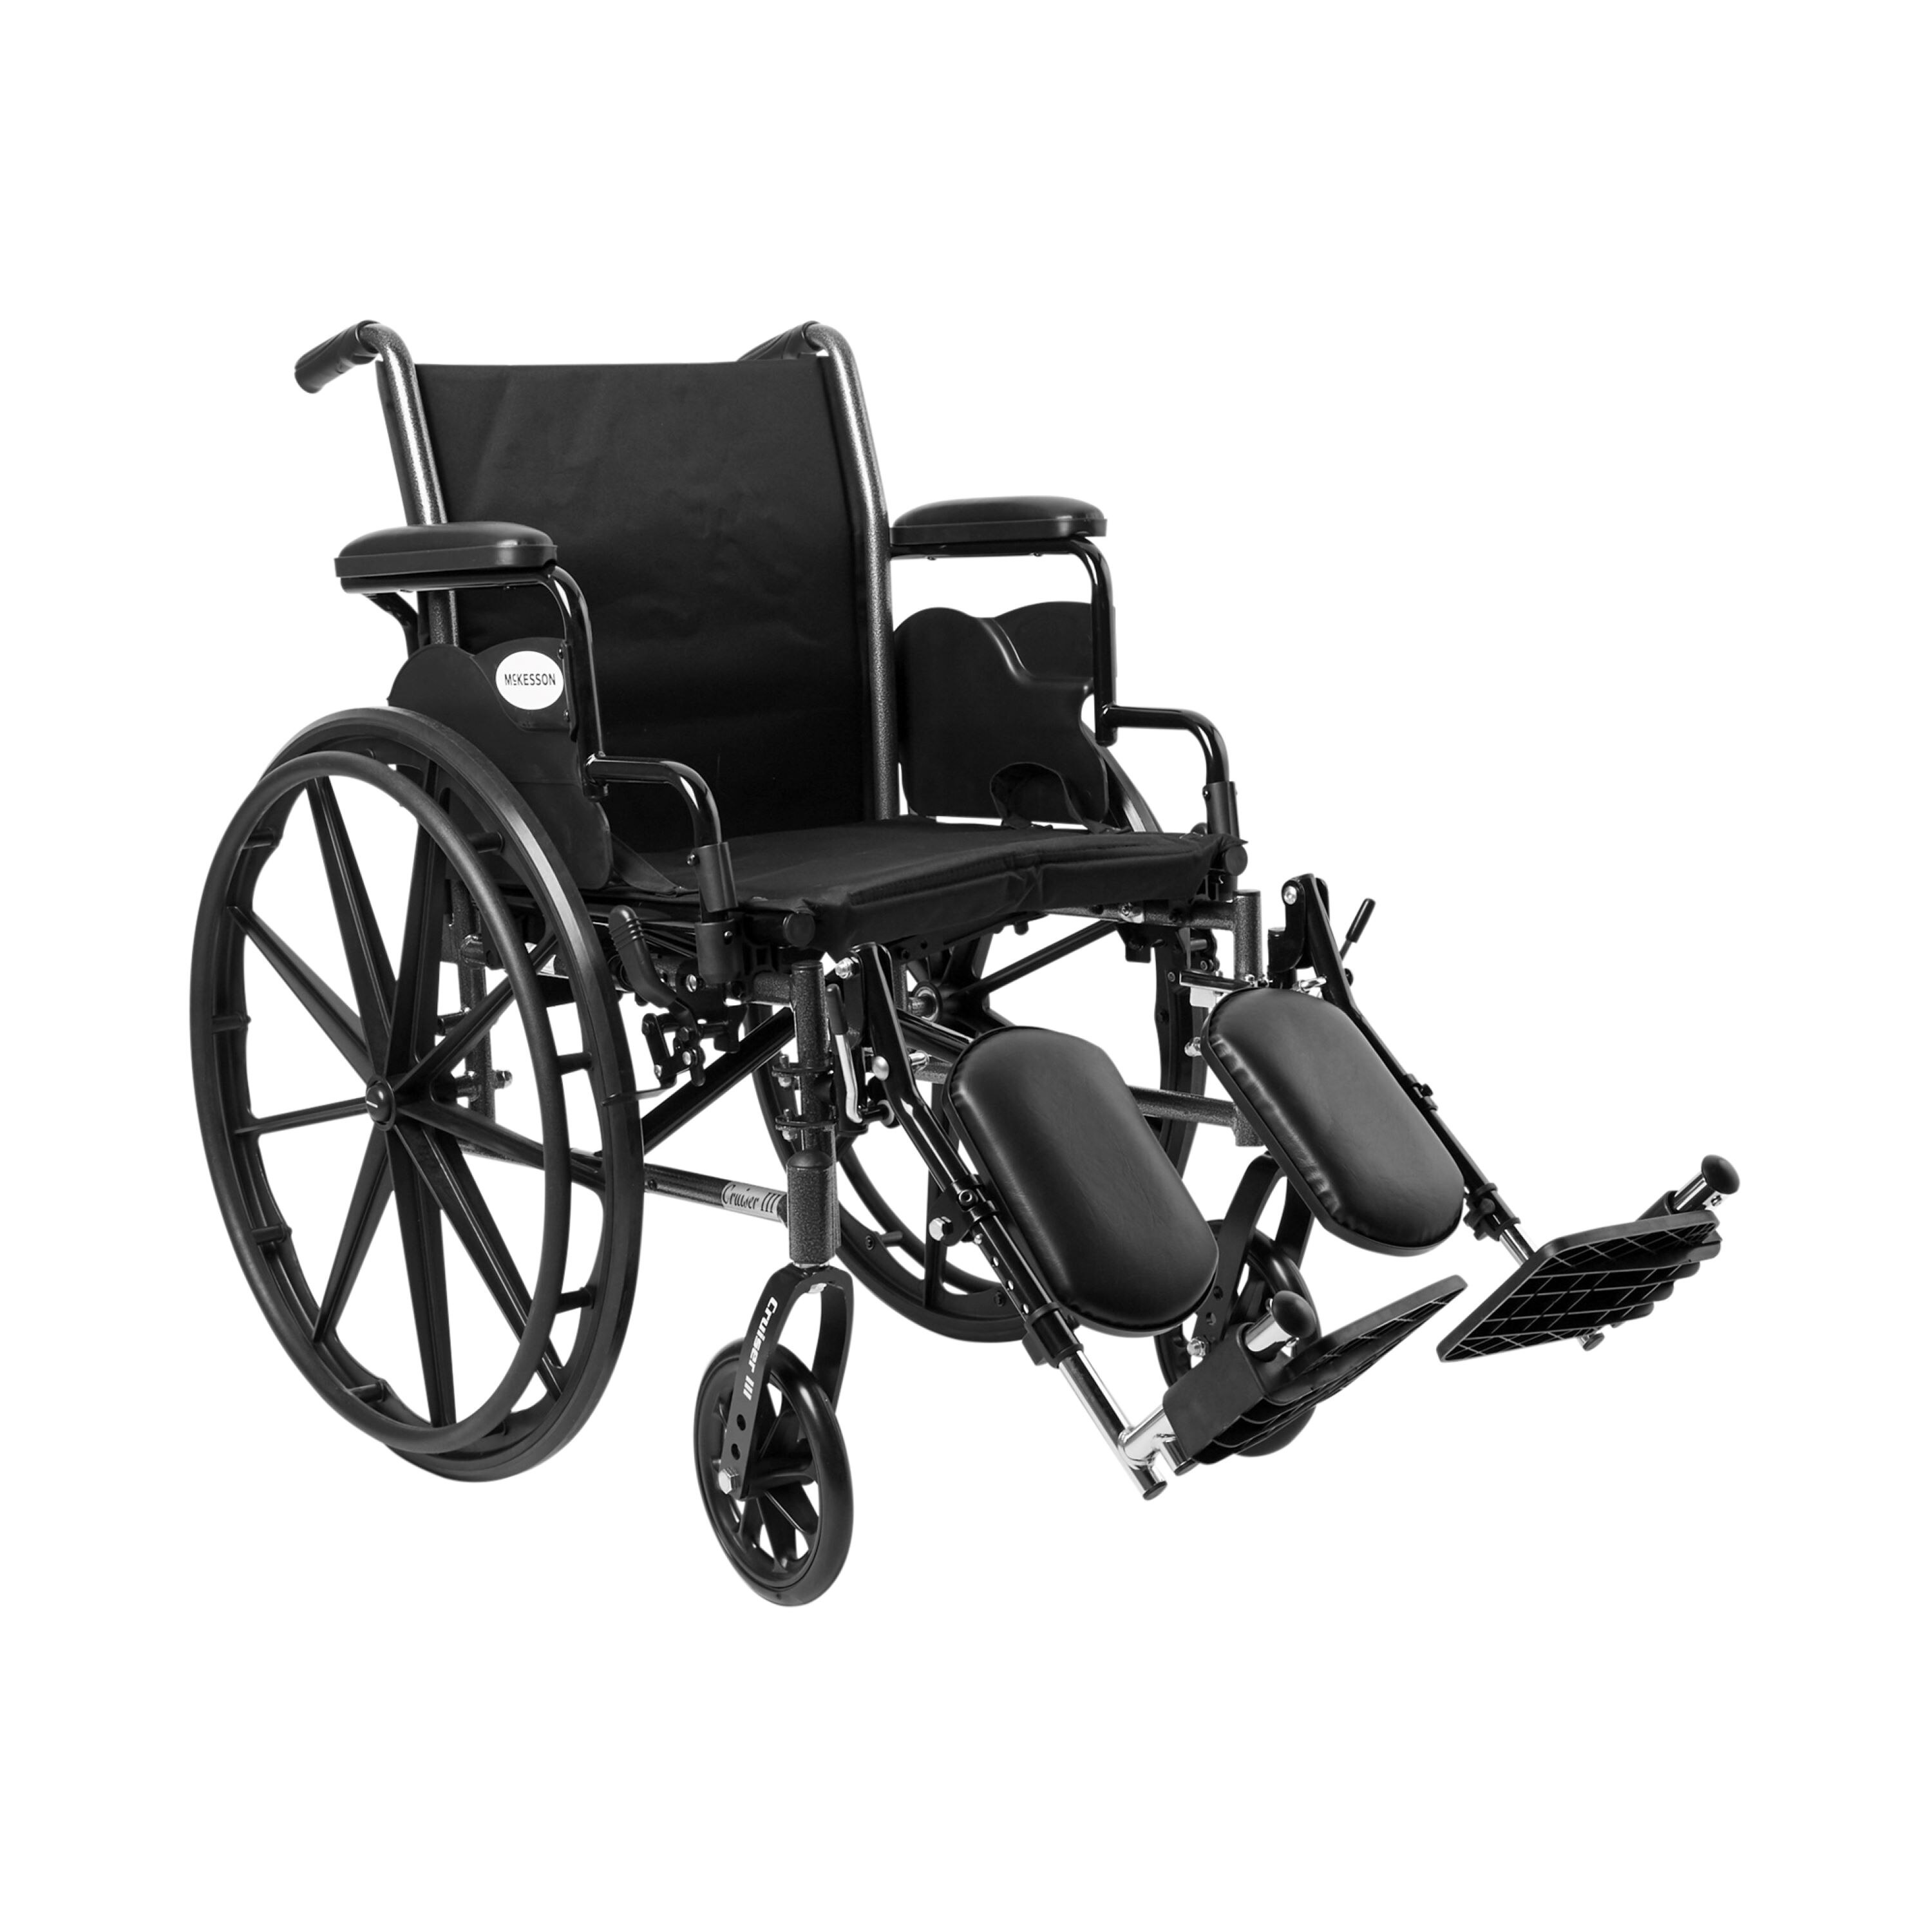 McKesson Lightweight Wheelchair, 18 Inch Seat Width, 300 lbs. Weight Capacity